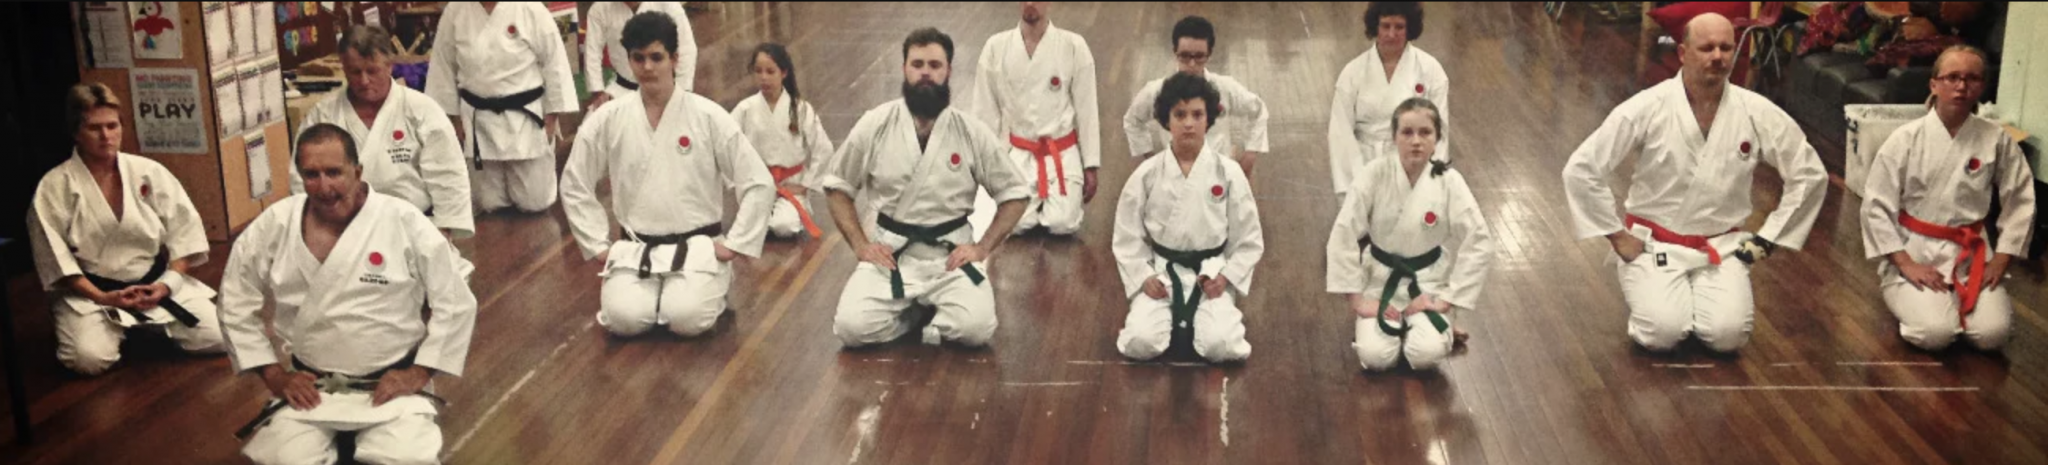 Brighton karate class